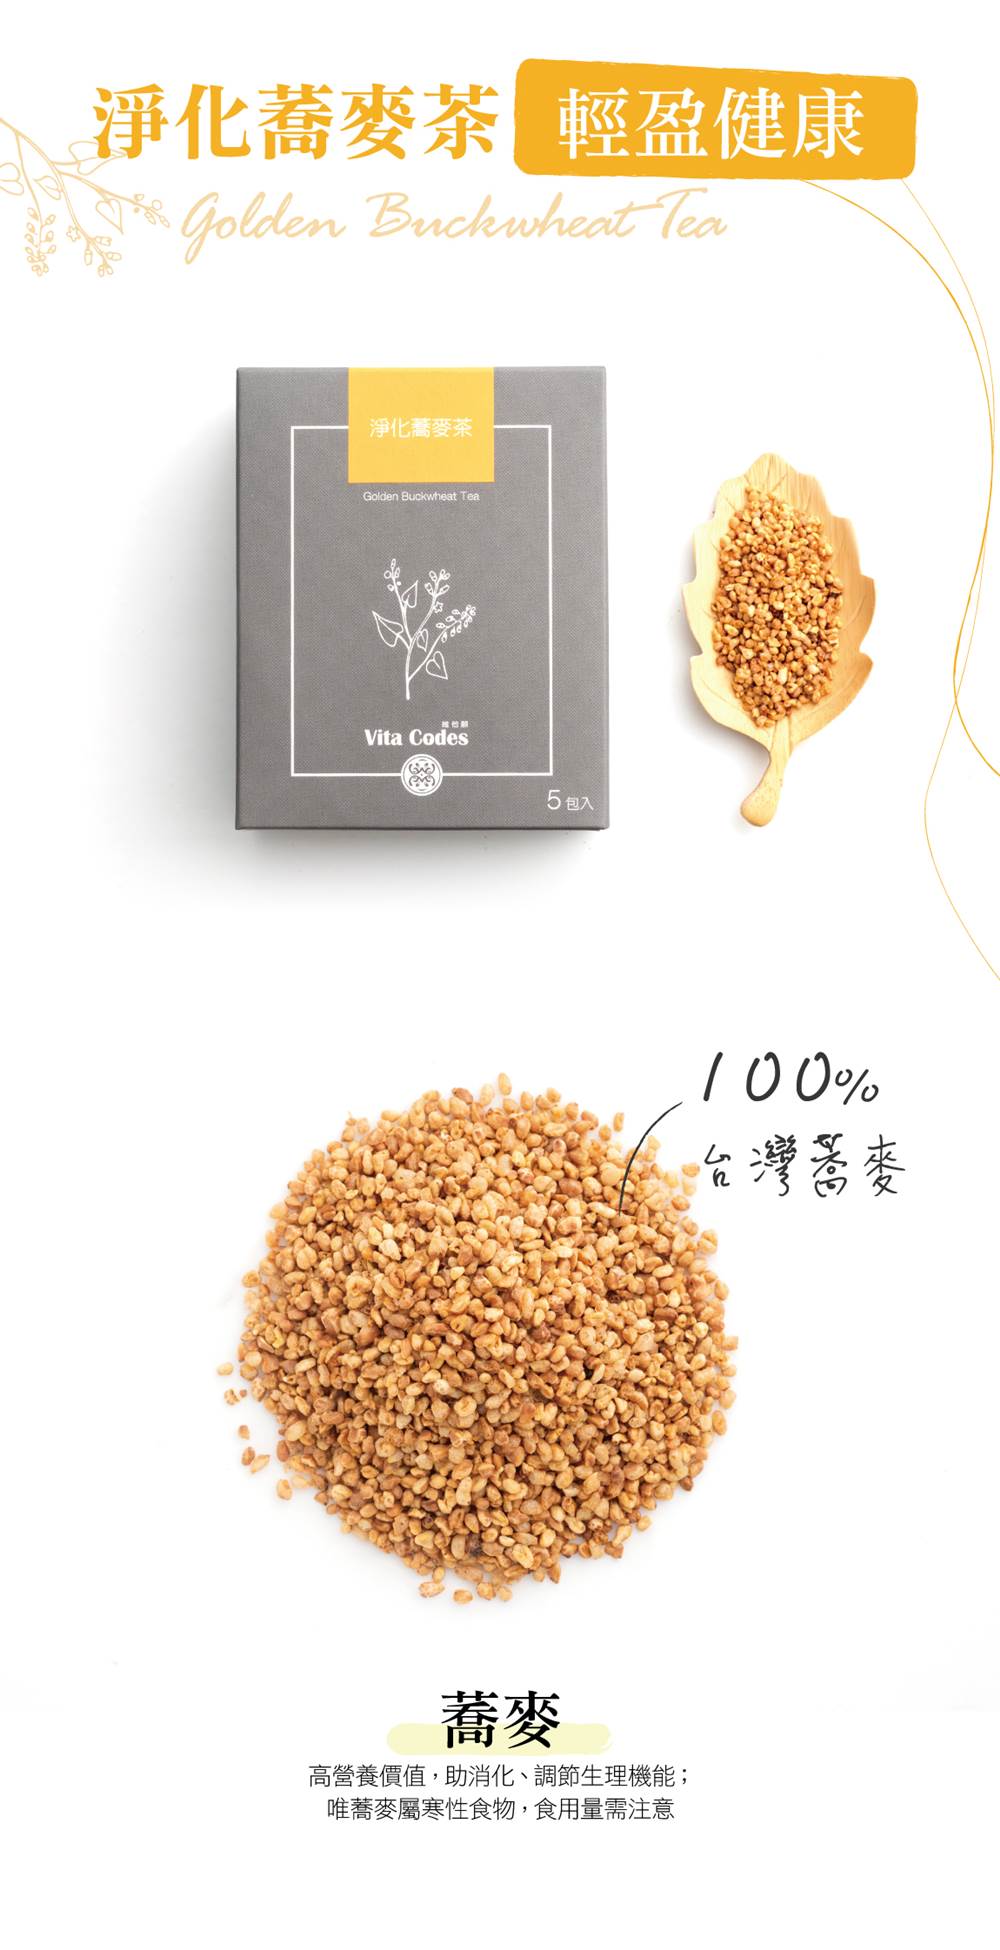 VitaCodes美顏茶-產品介紹07-淨化蕎麥茶-輕盈健康